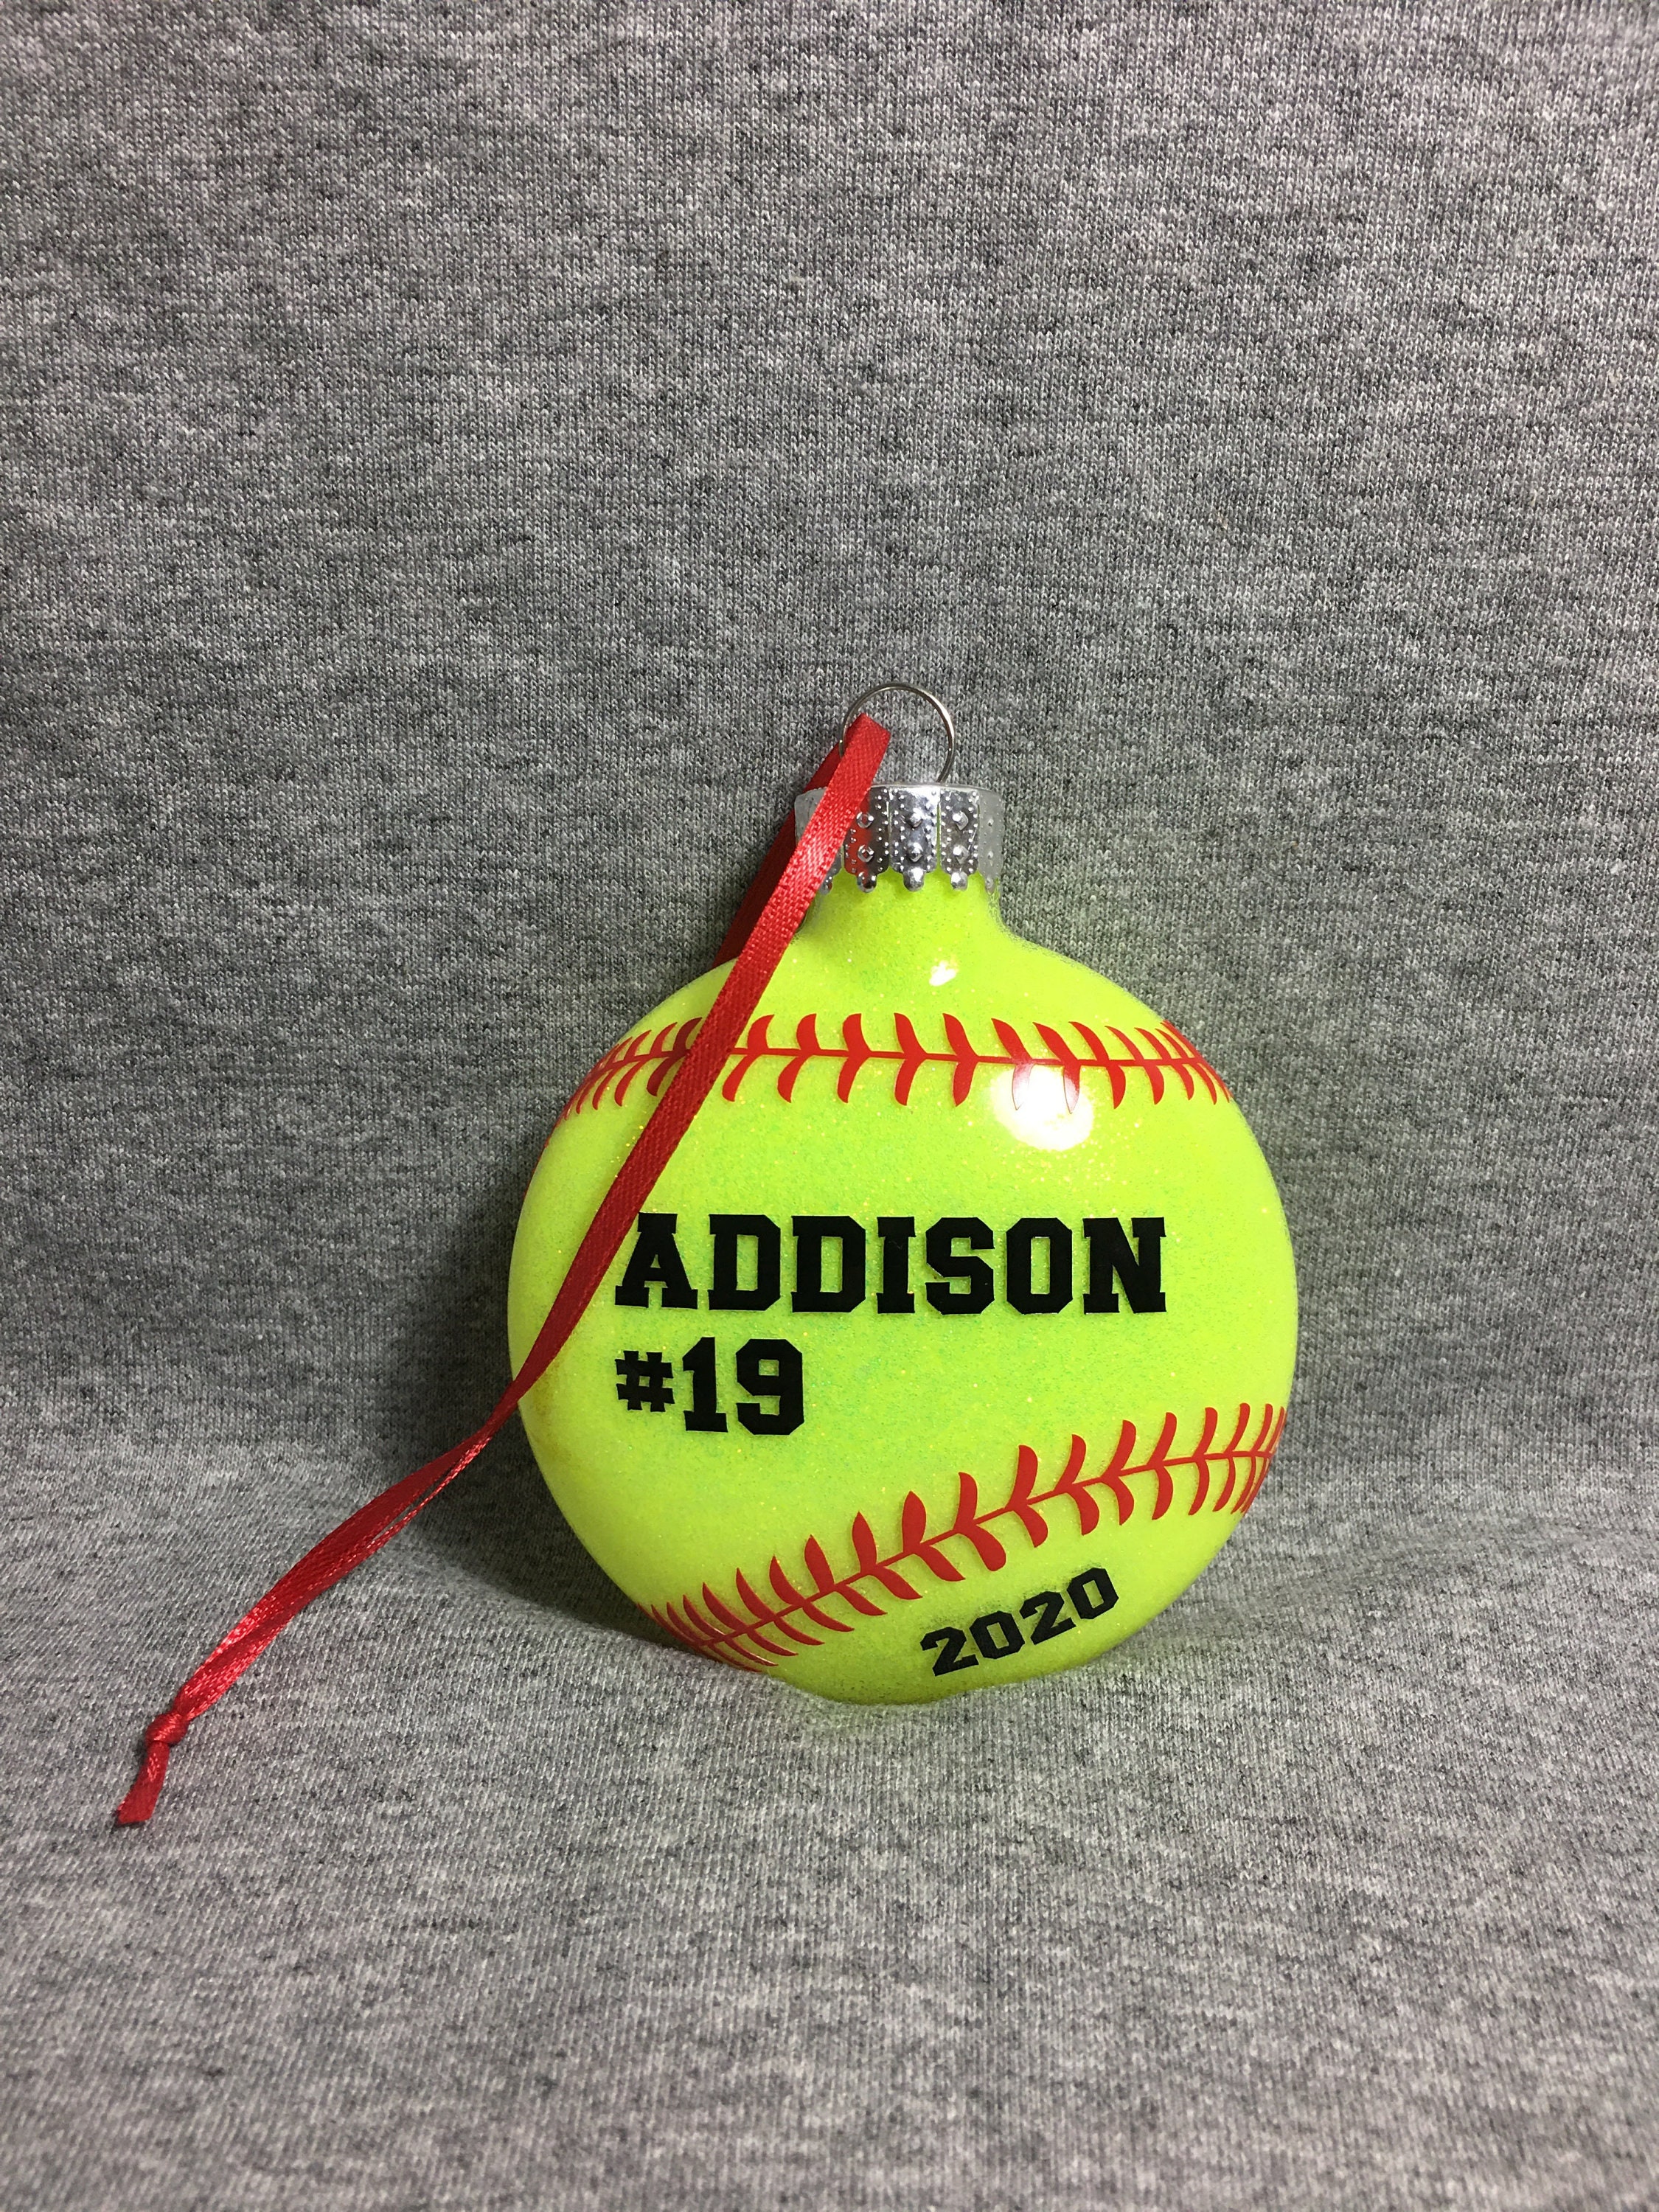 Personalized Softball Christmas Ornament,Gift for Softball Coach,Gift for Softball Team,Softball Ornament,Custom Softball Ornament,